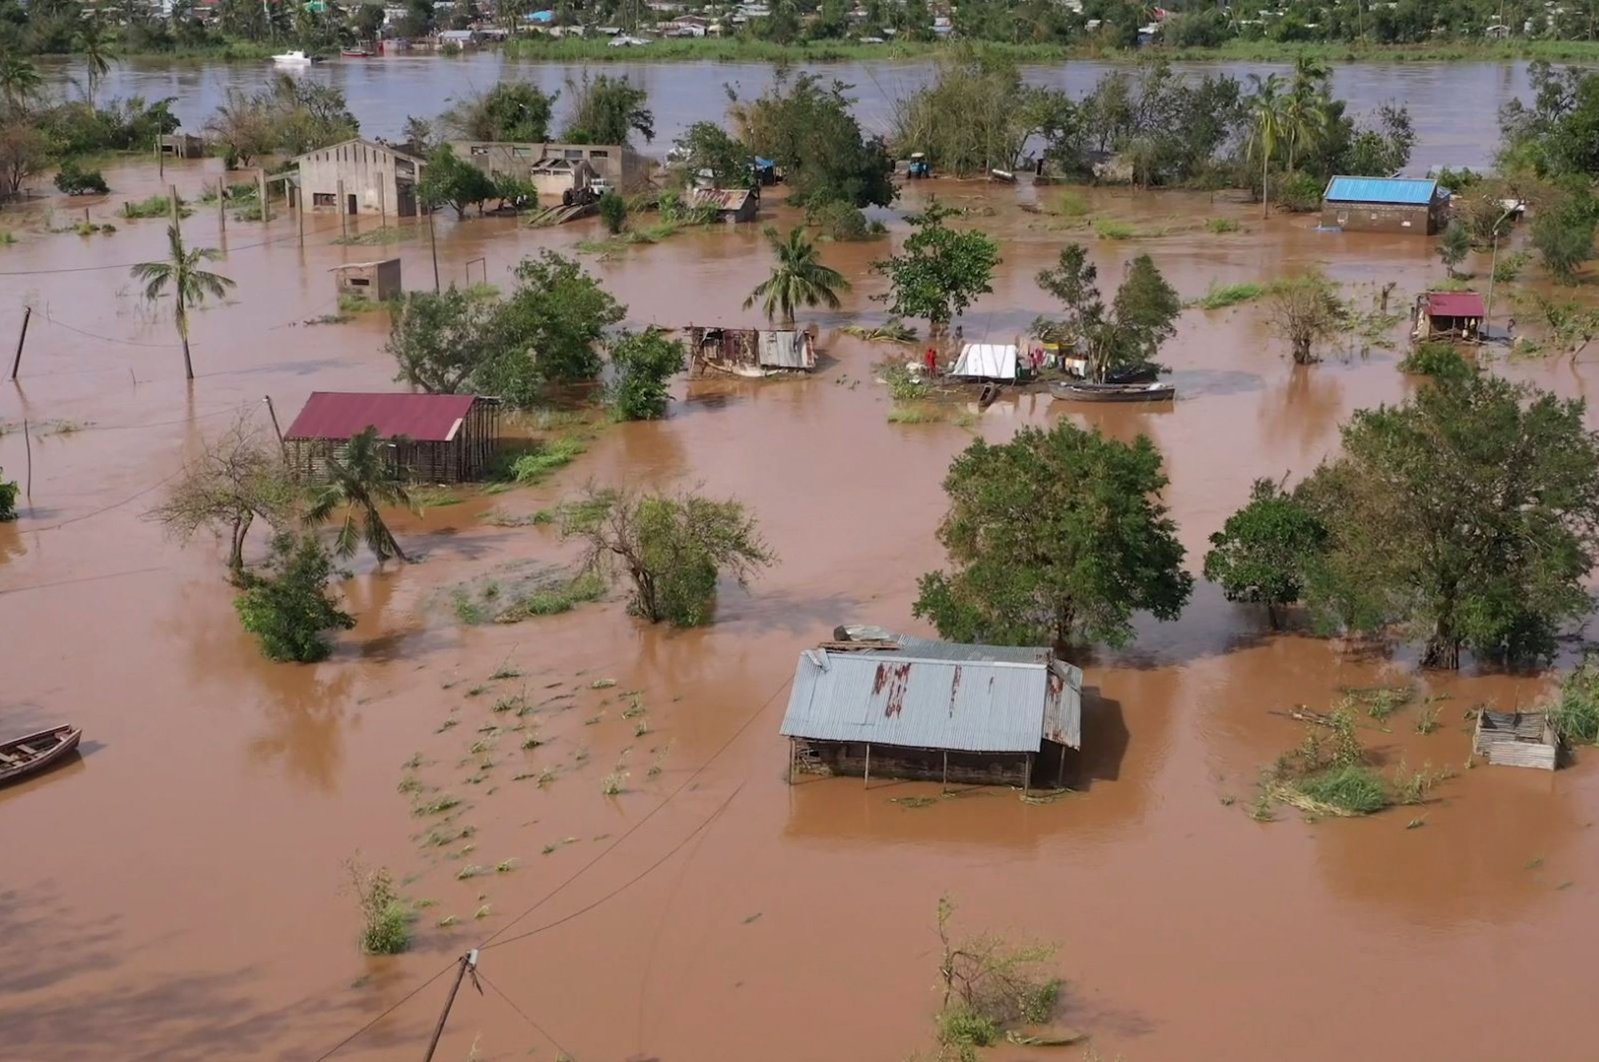 Storm Eloise wreaks havoc across SE Africa, killing at least 12